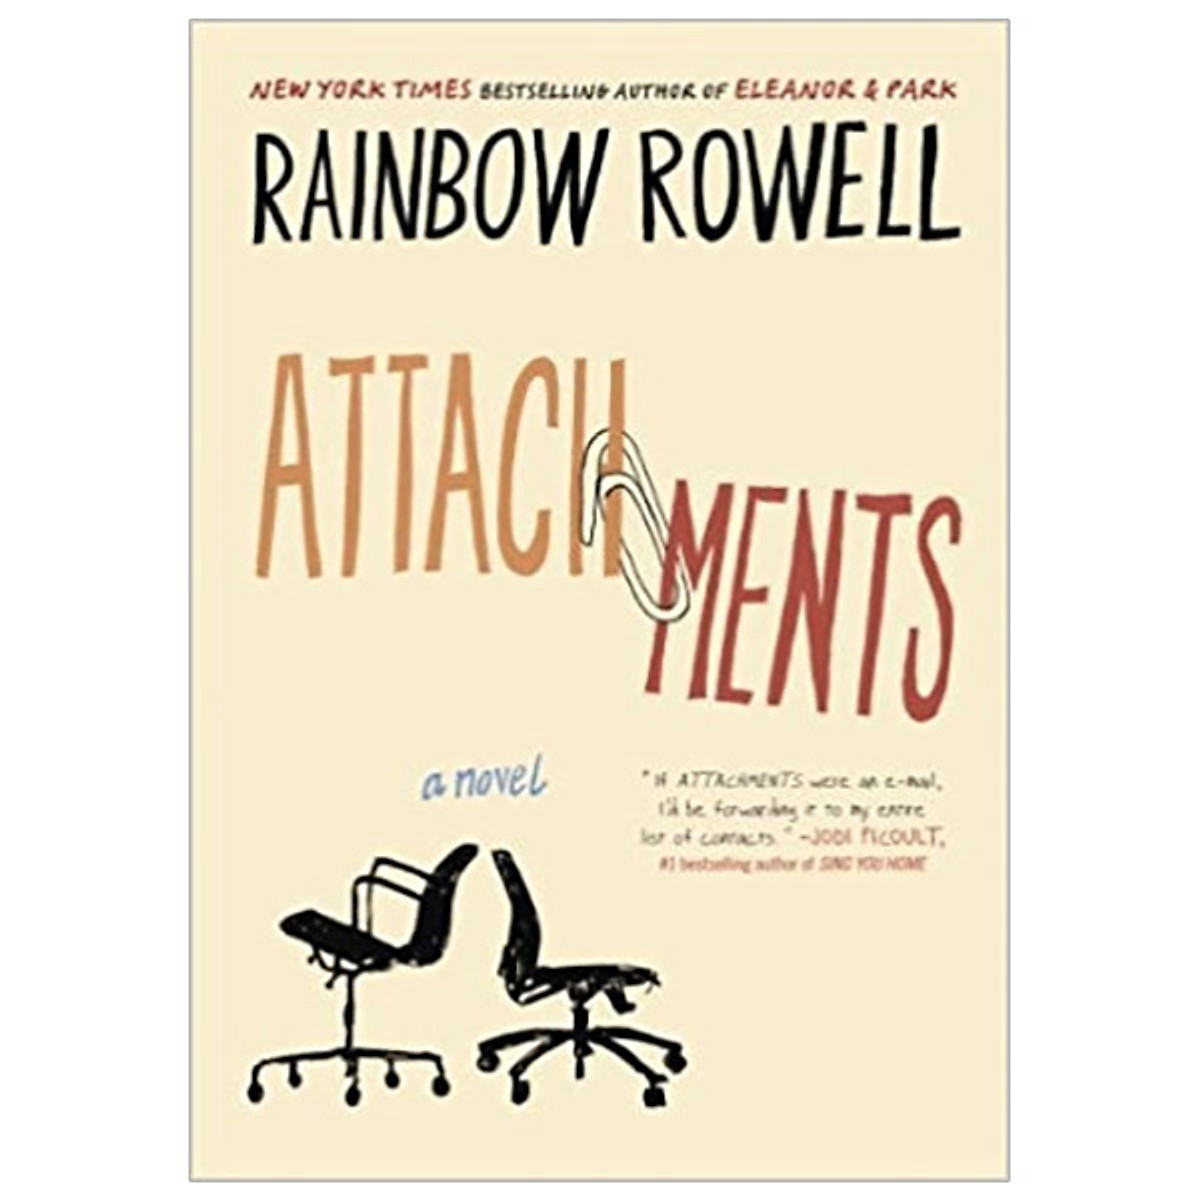 Attachments: A Novel